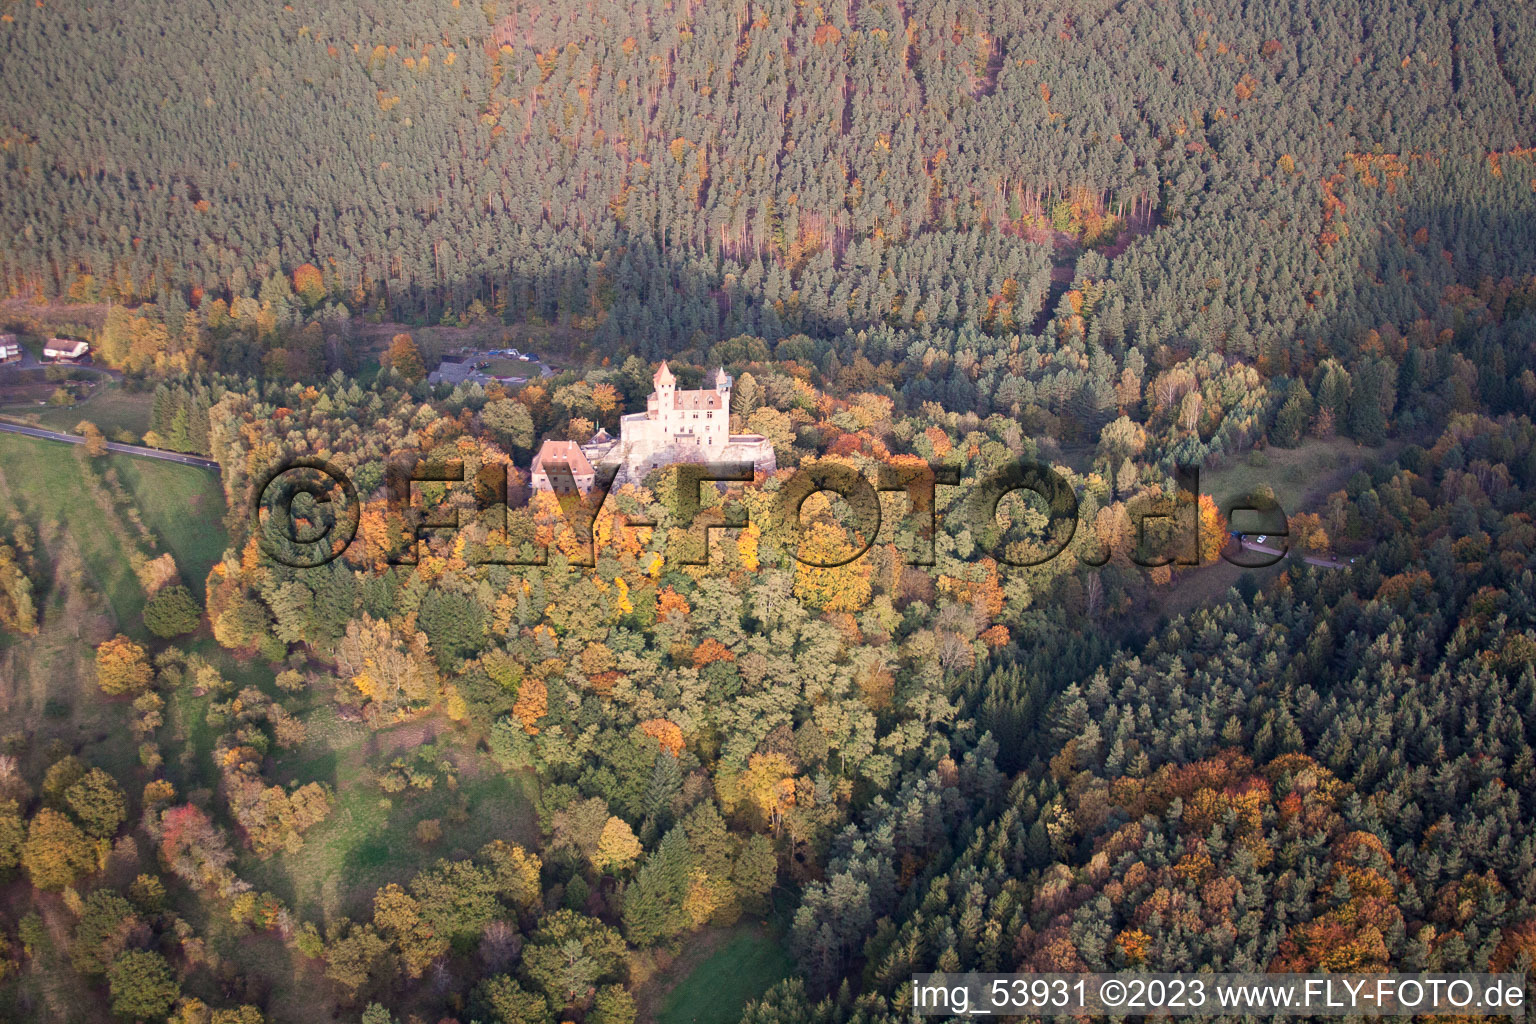 Aerial photograpy of Berwartstein Castle in Erlenbach bei Dahn in the state Rhineland-Palatinate, Germany